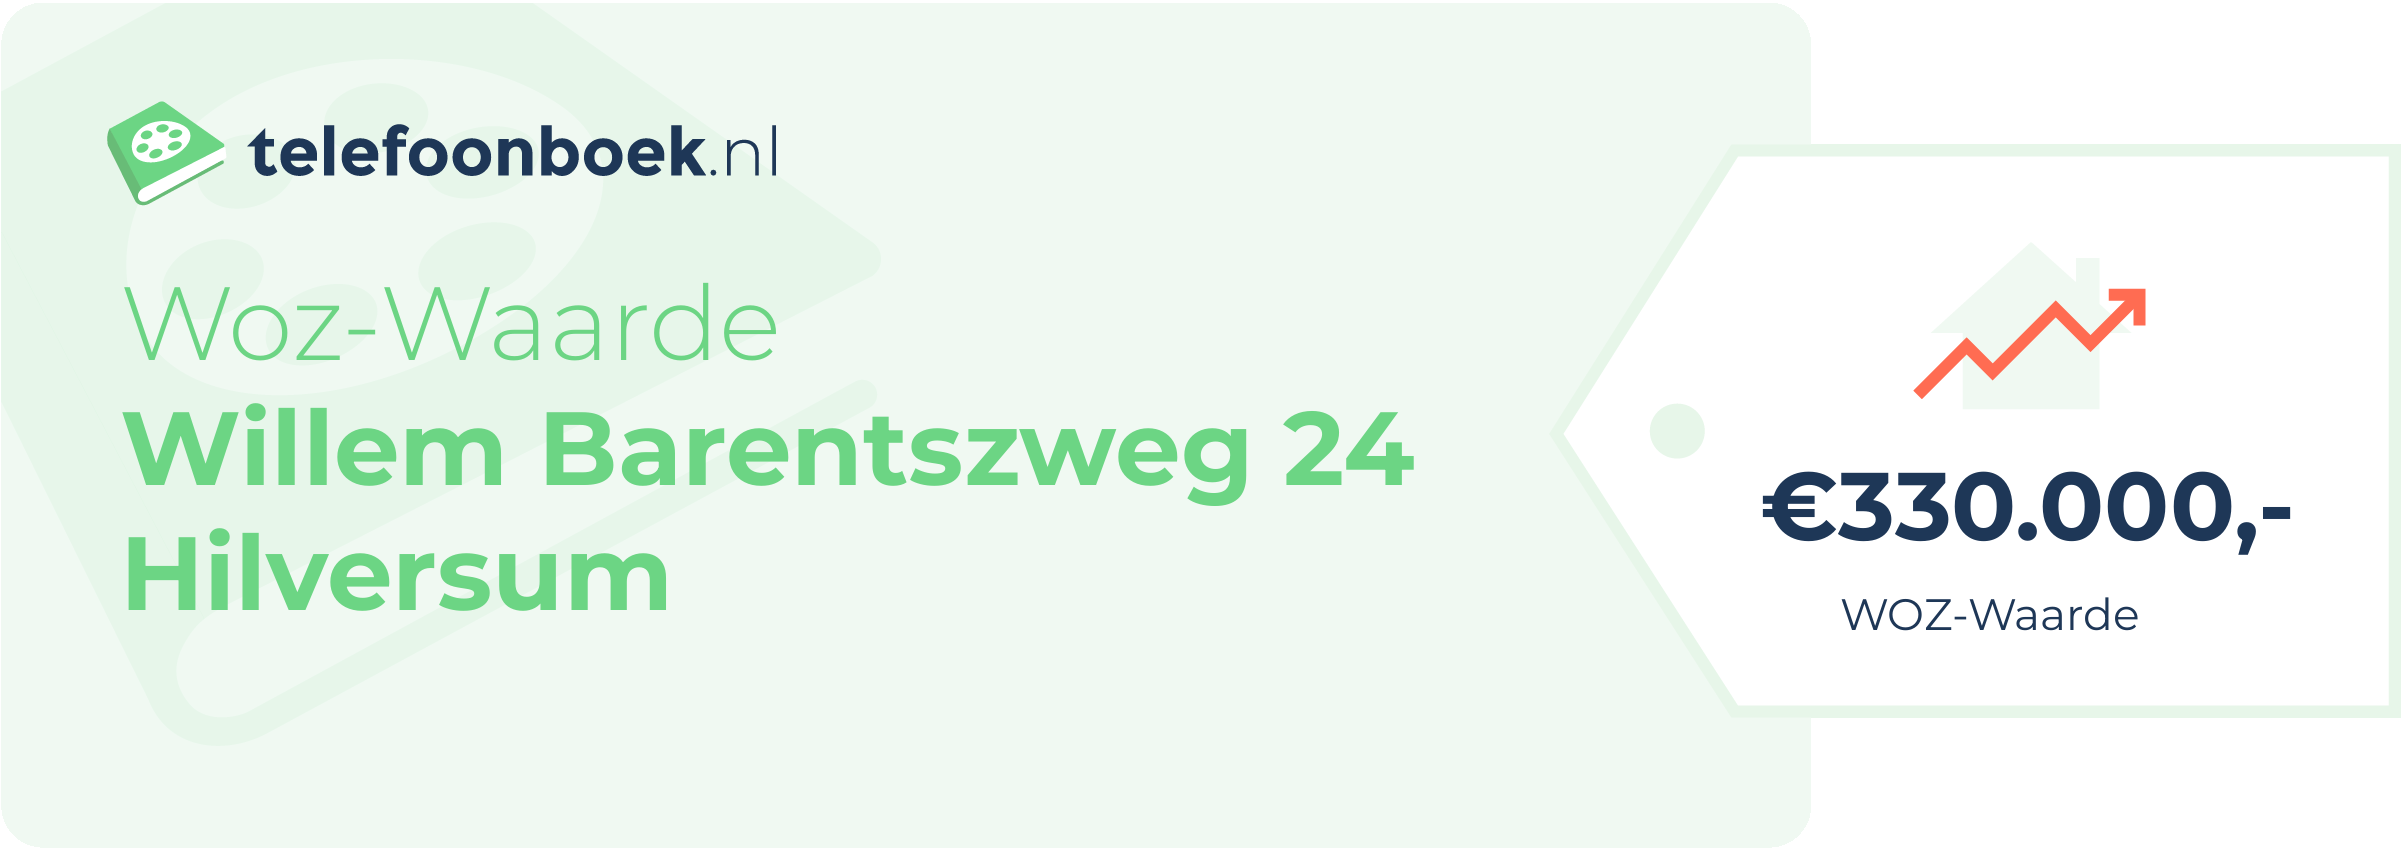 WOZ-waarde Willem Barentszweg 24 Hilversum